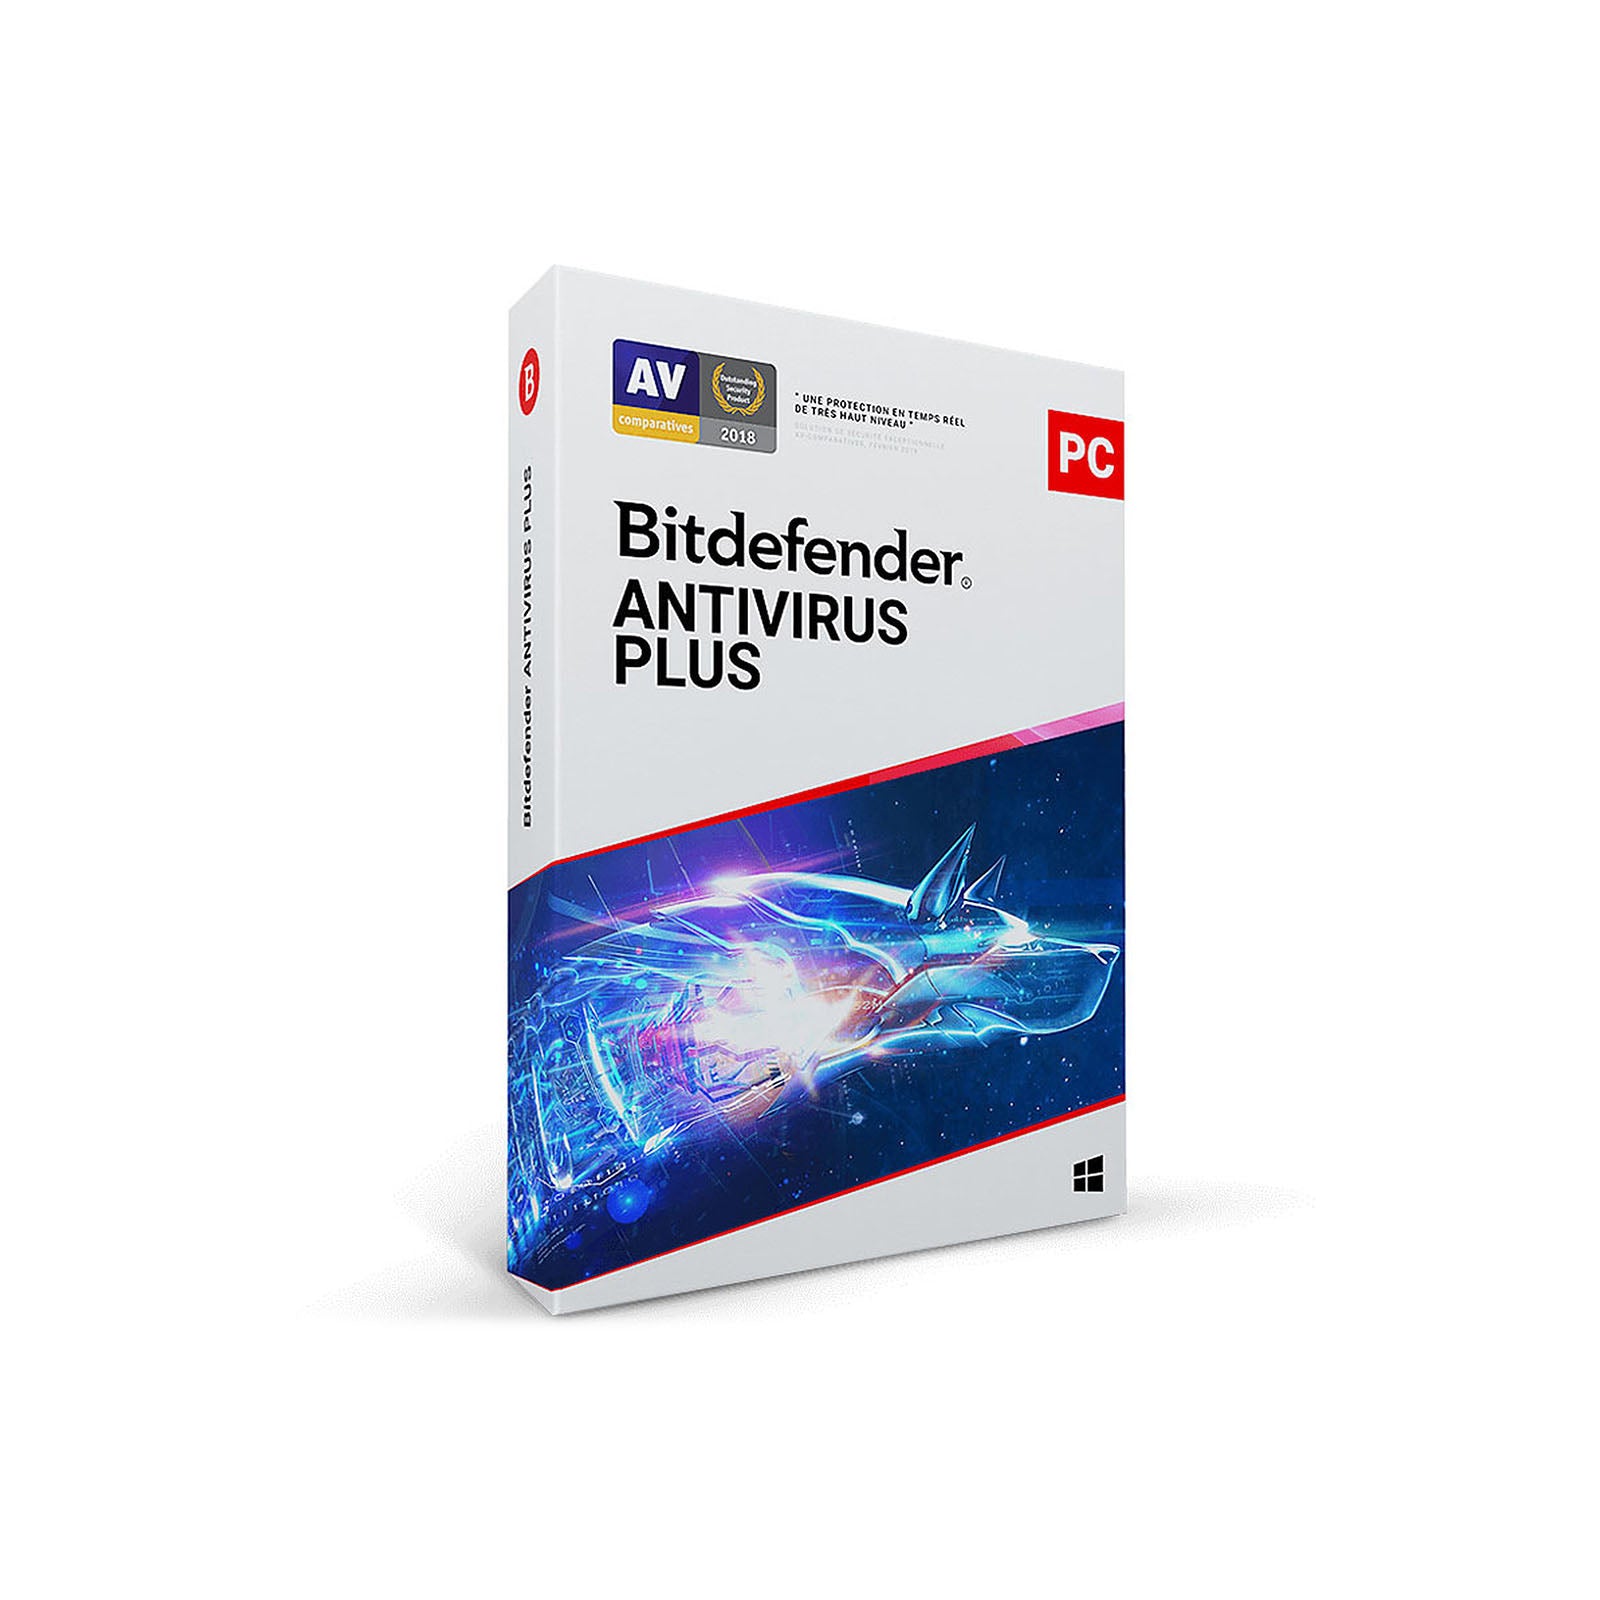 Bitdefender antivirus - Plus - Licence 1 Appareil / 1 an (Boite)